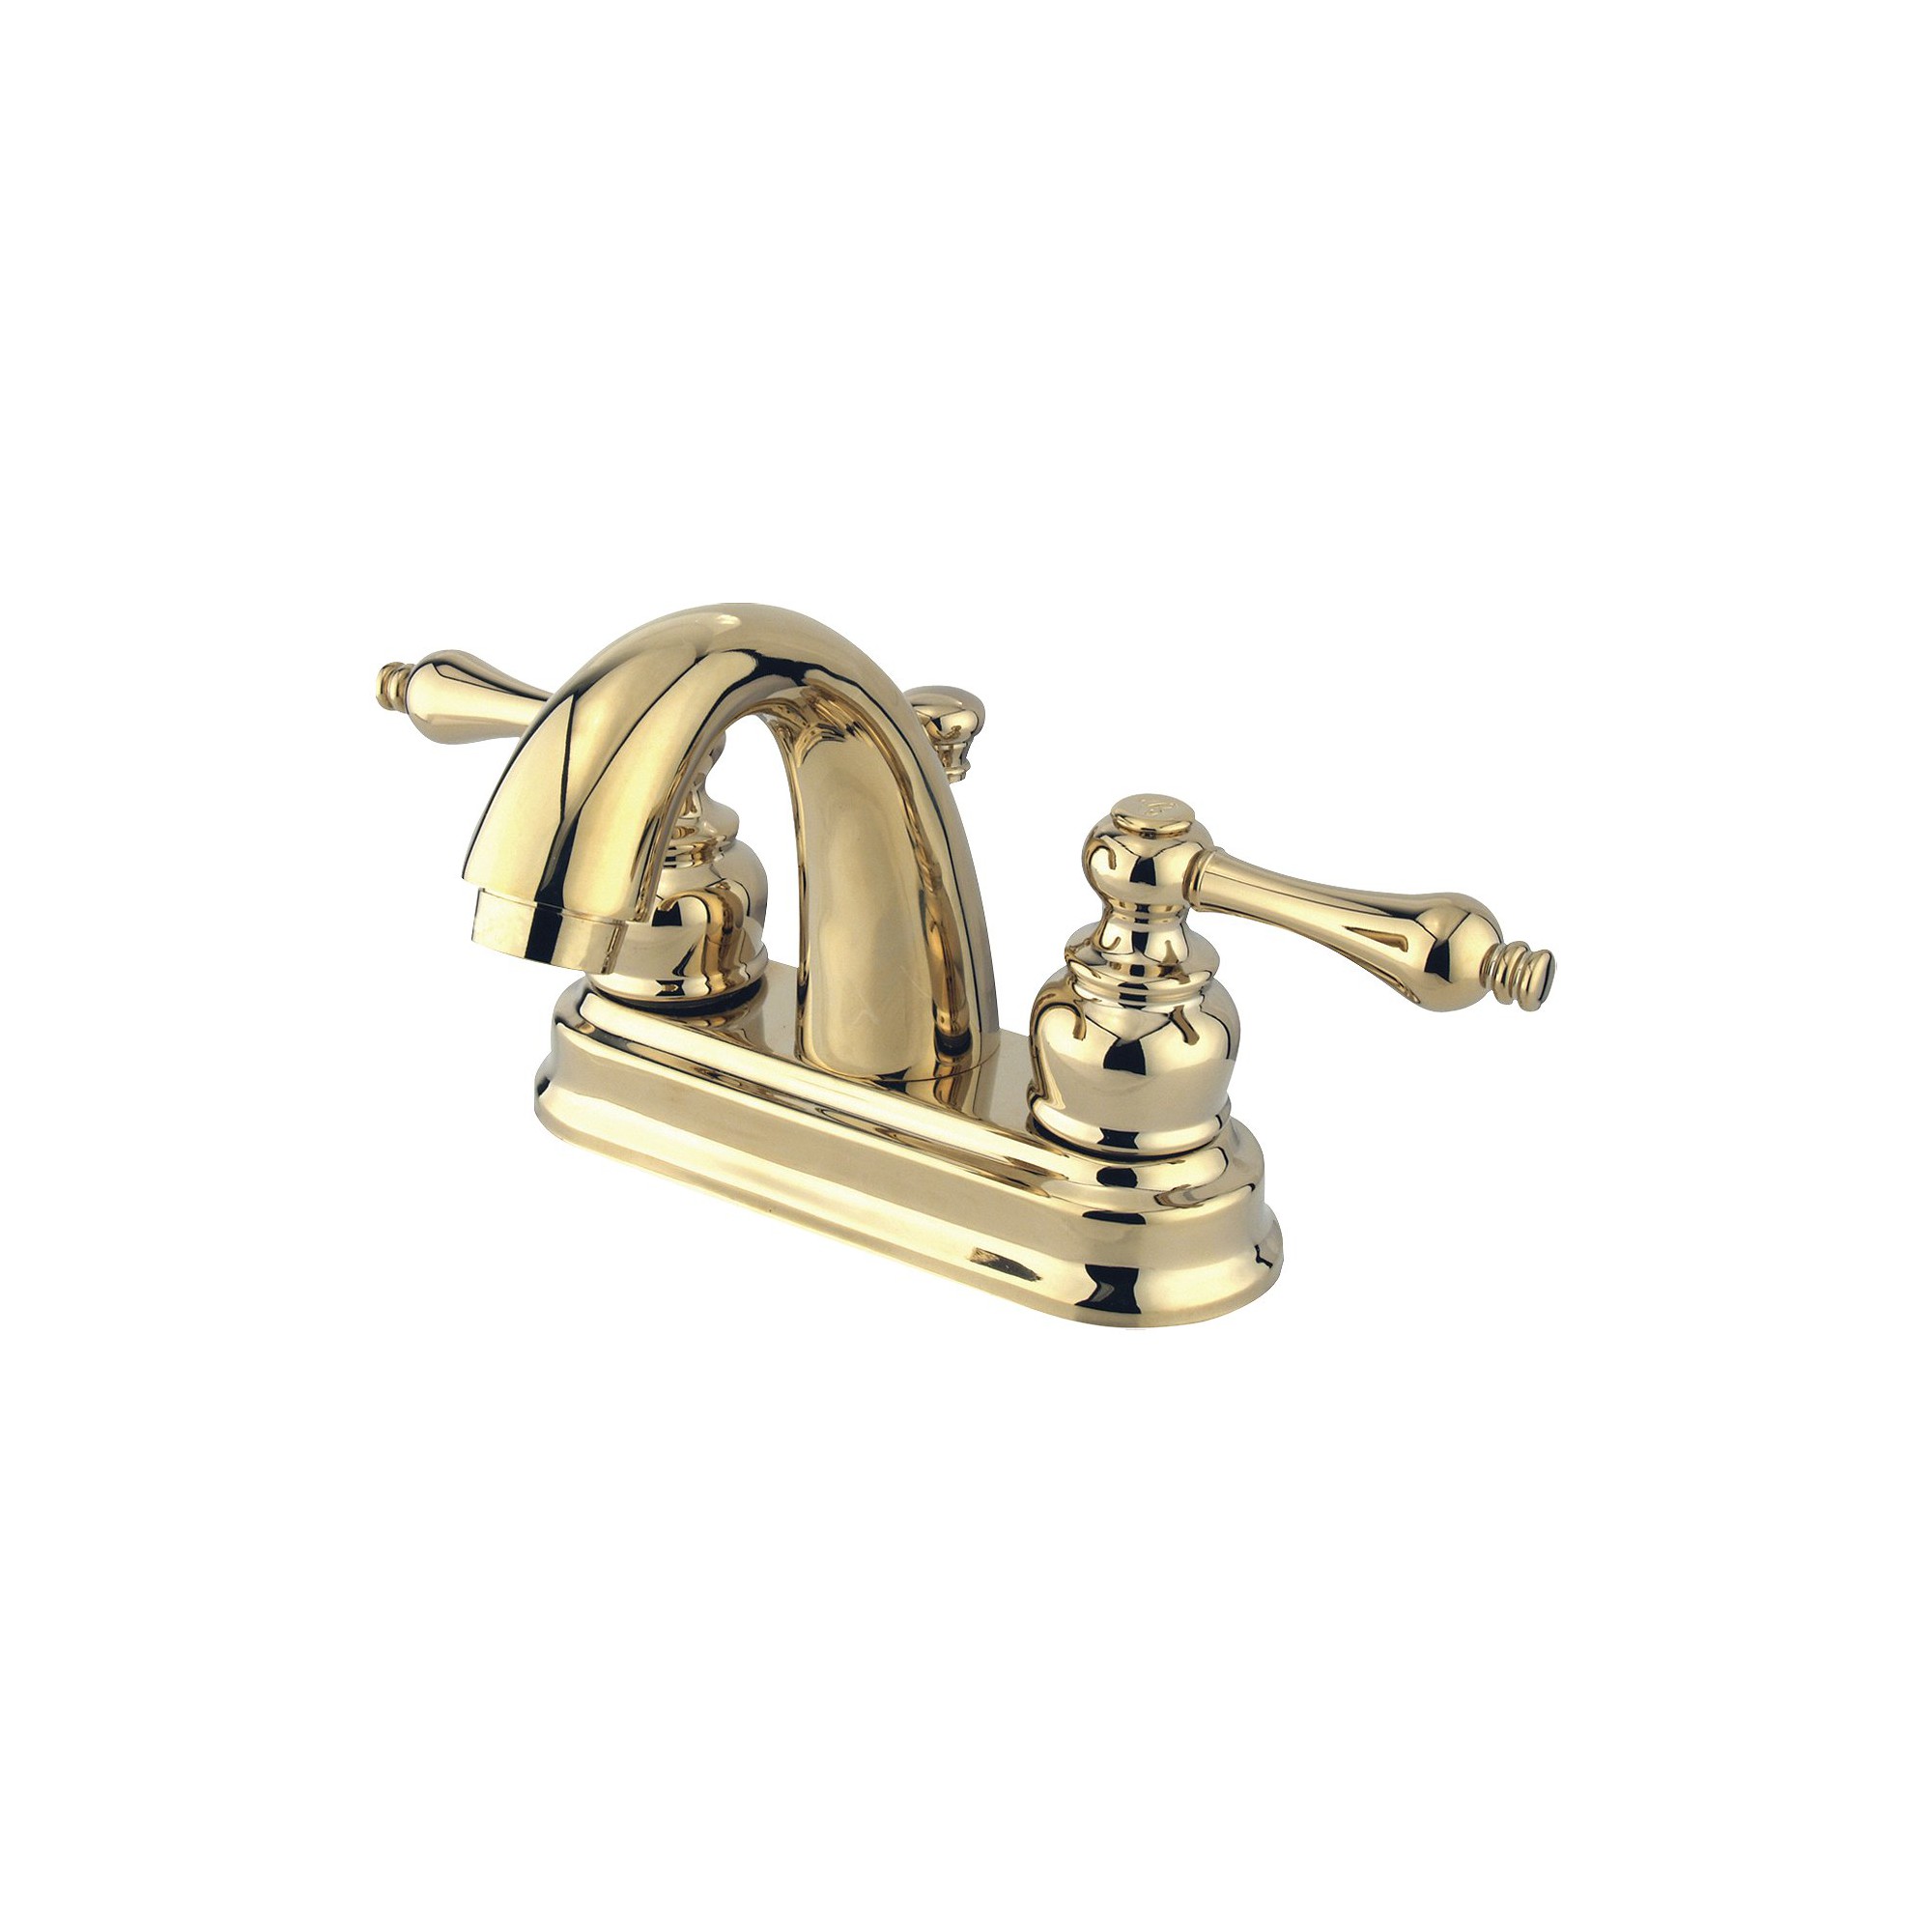 Restoration Classic Bathroom Faucet Polished Brass - Kingston Brass